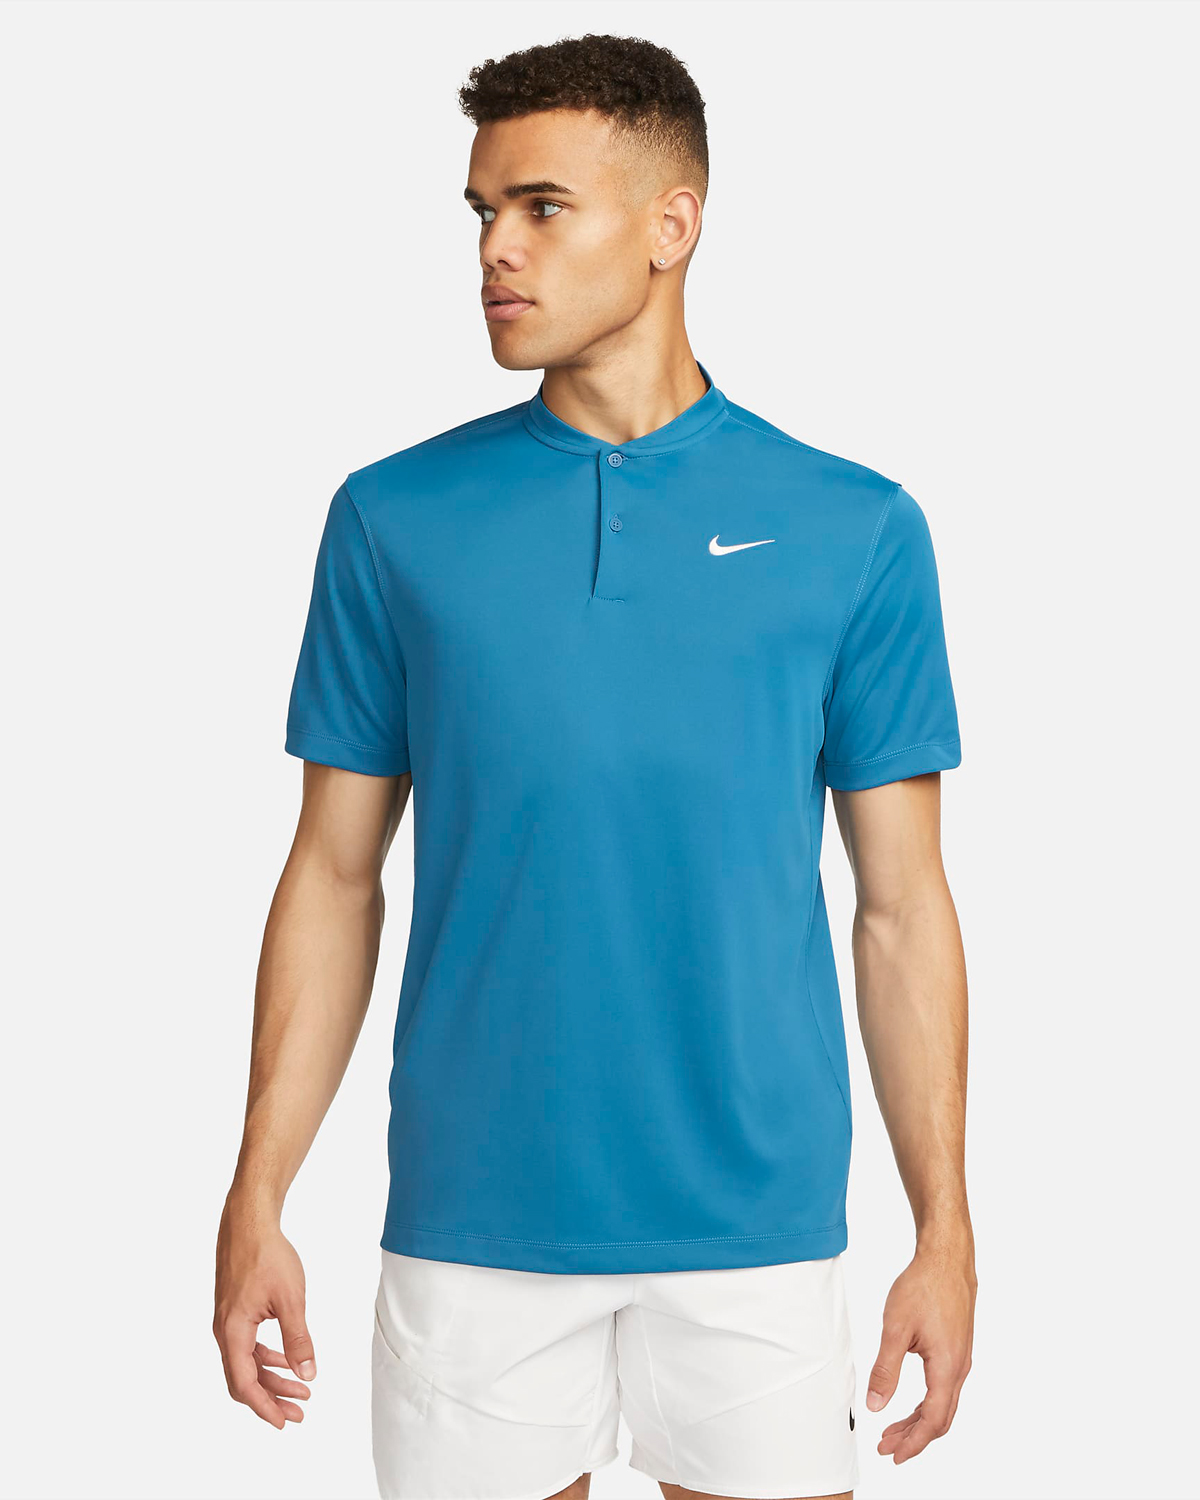 Nike-Tennis-Polo-Shirt-Industrial-Blue